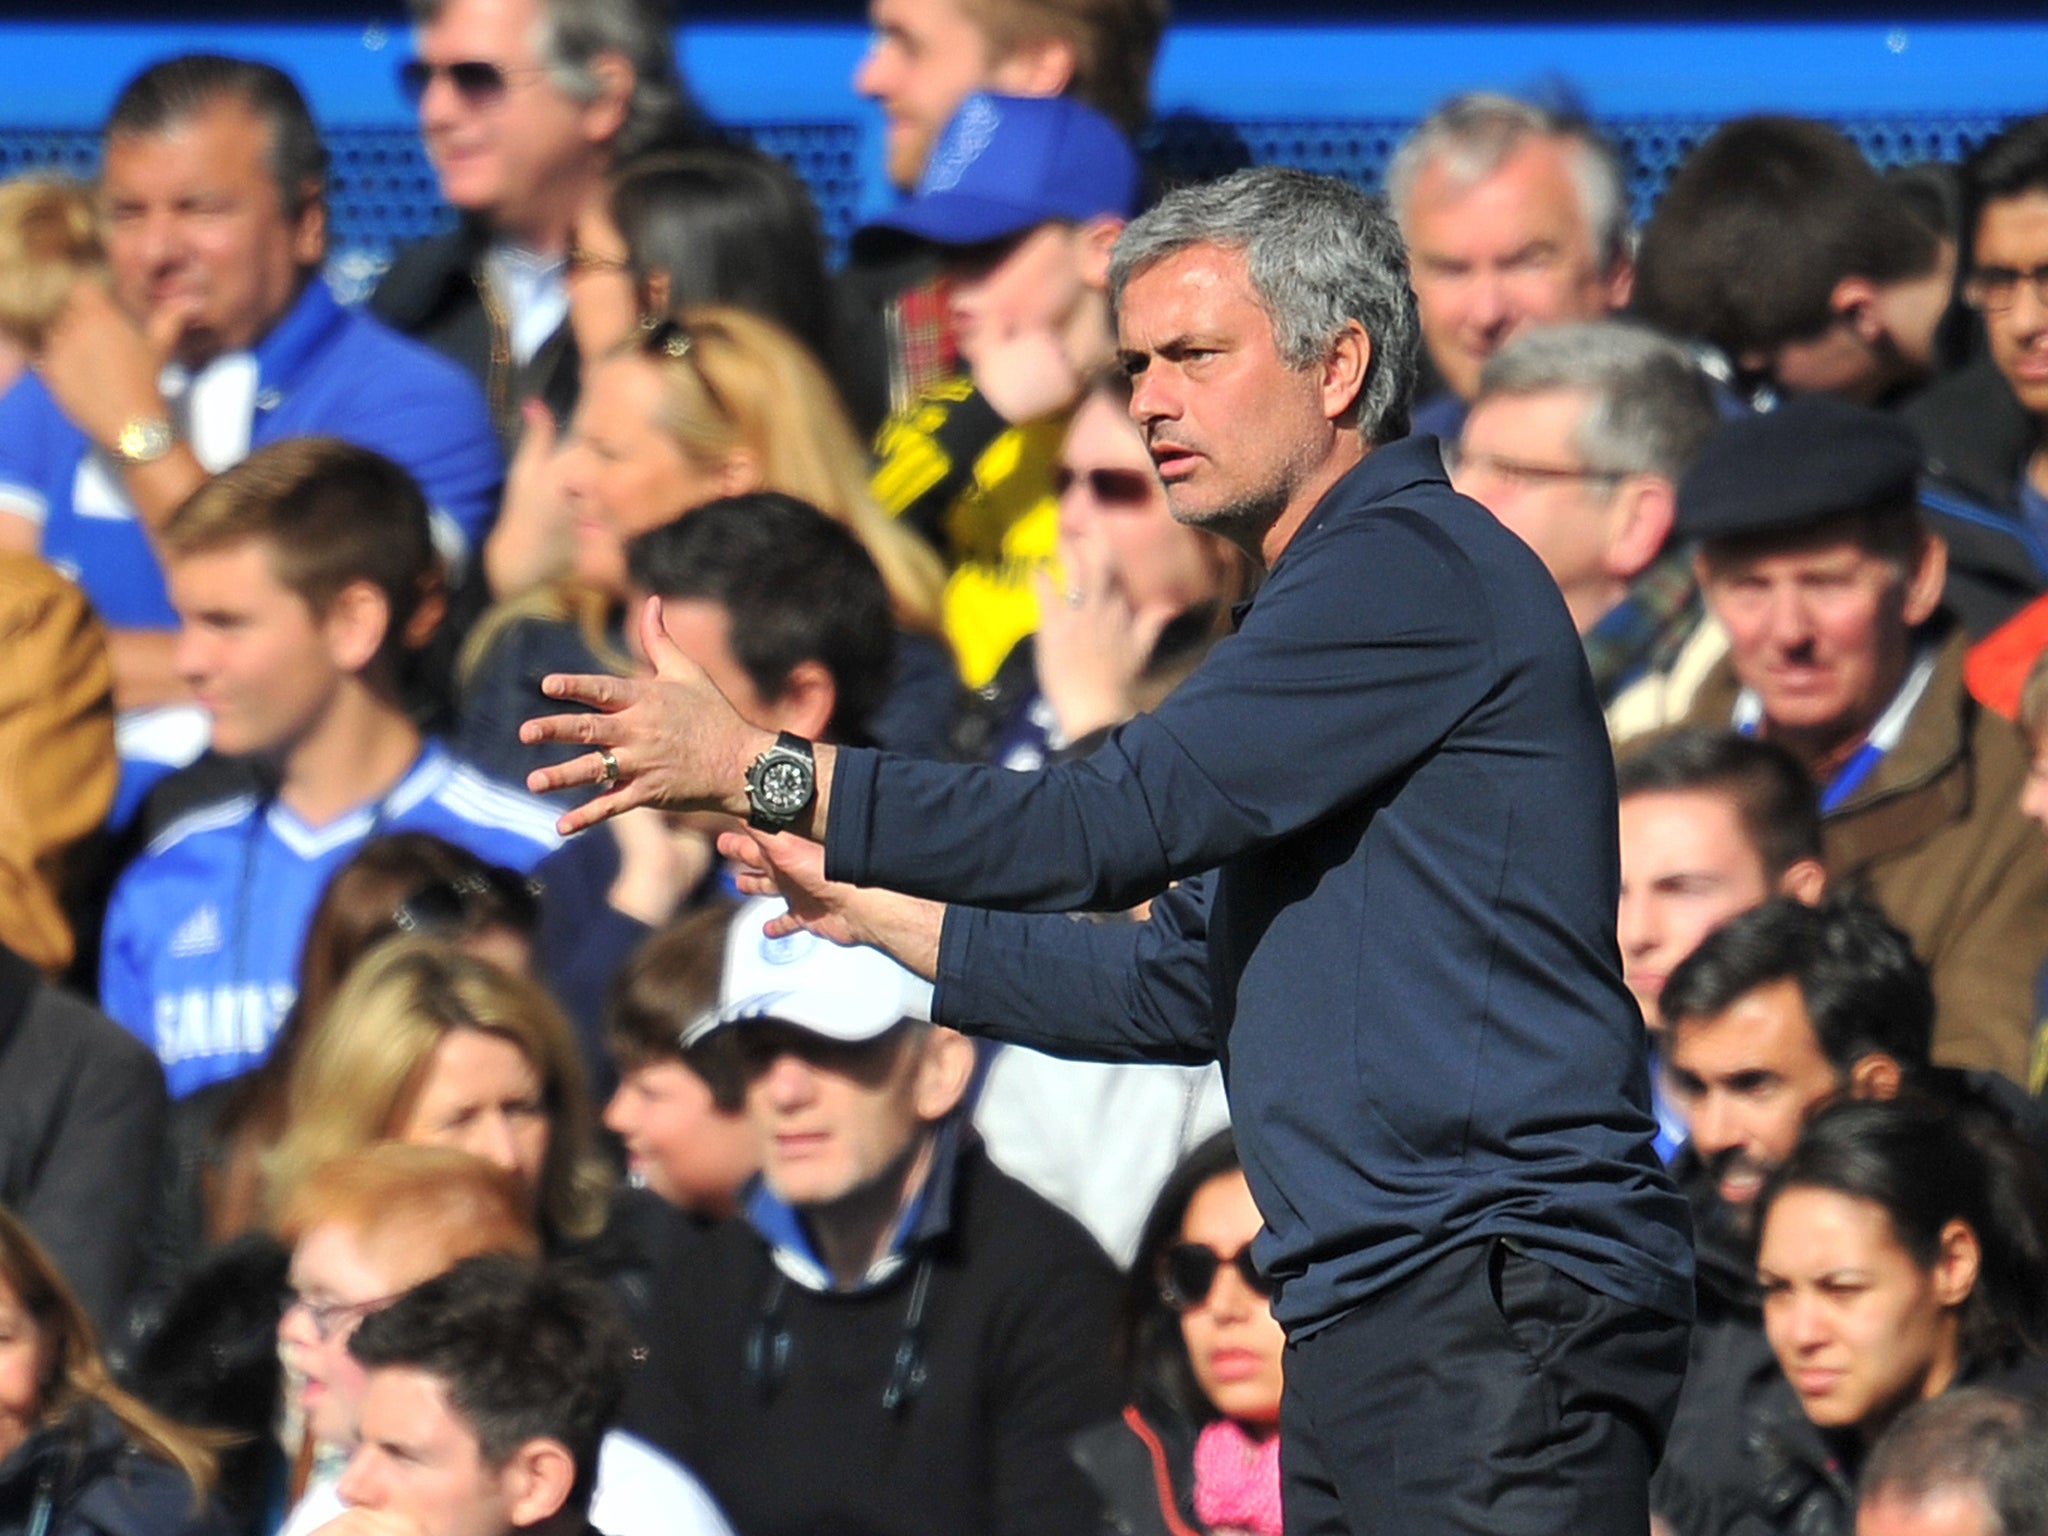 Jose Mourinho gestures on the sideline during Chelsea's 6-0 demolition of Arsenal